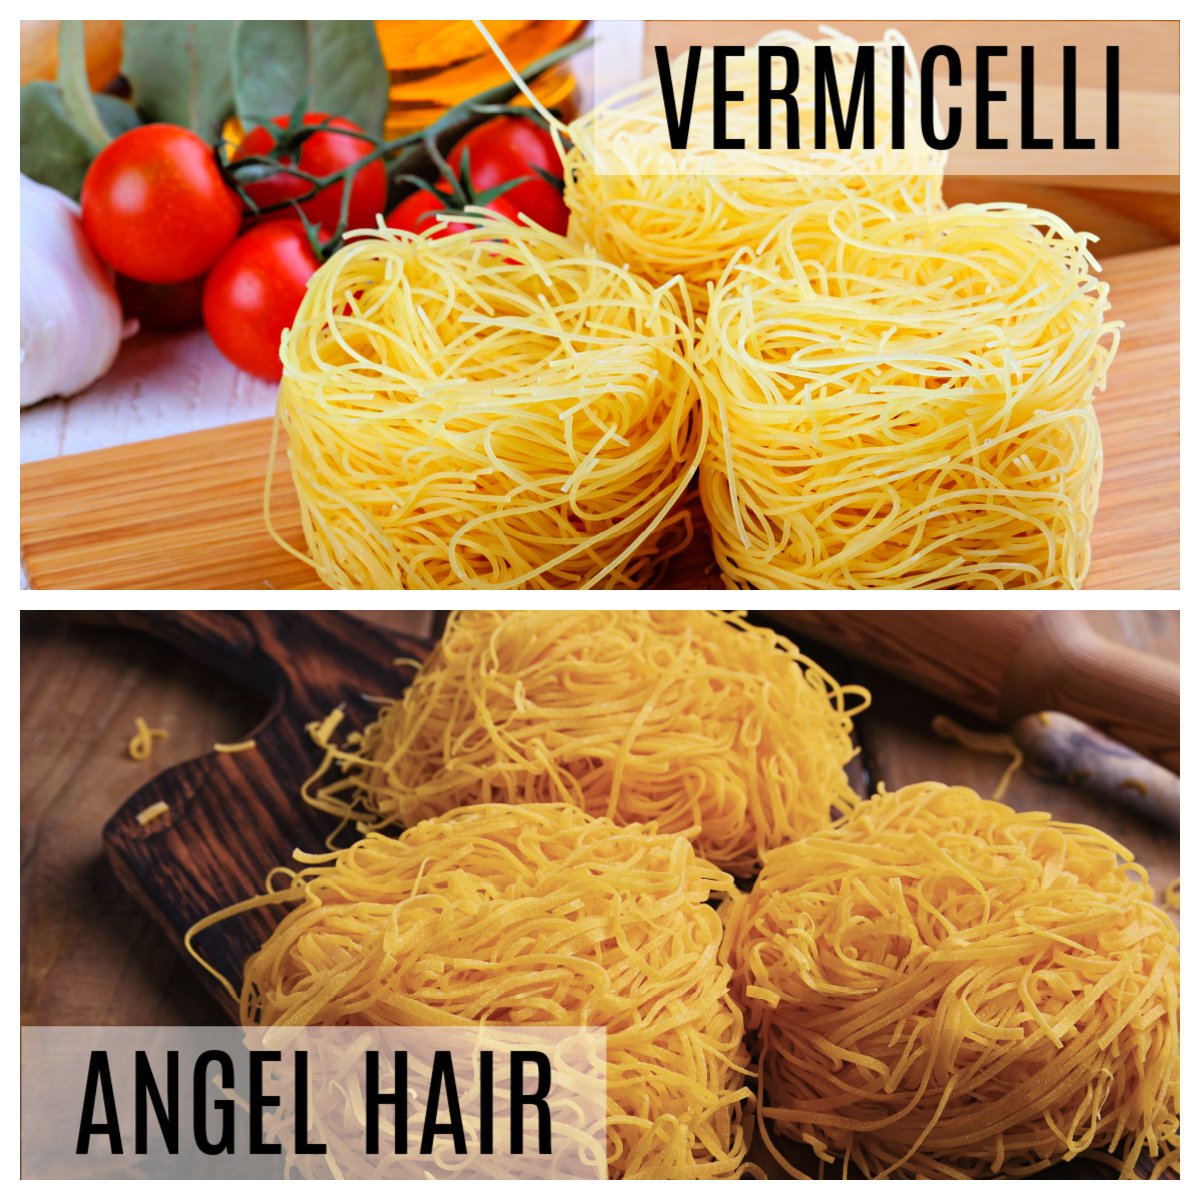 vermicelli vs angel hair or tagliatelle